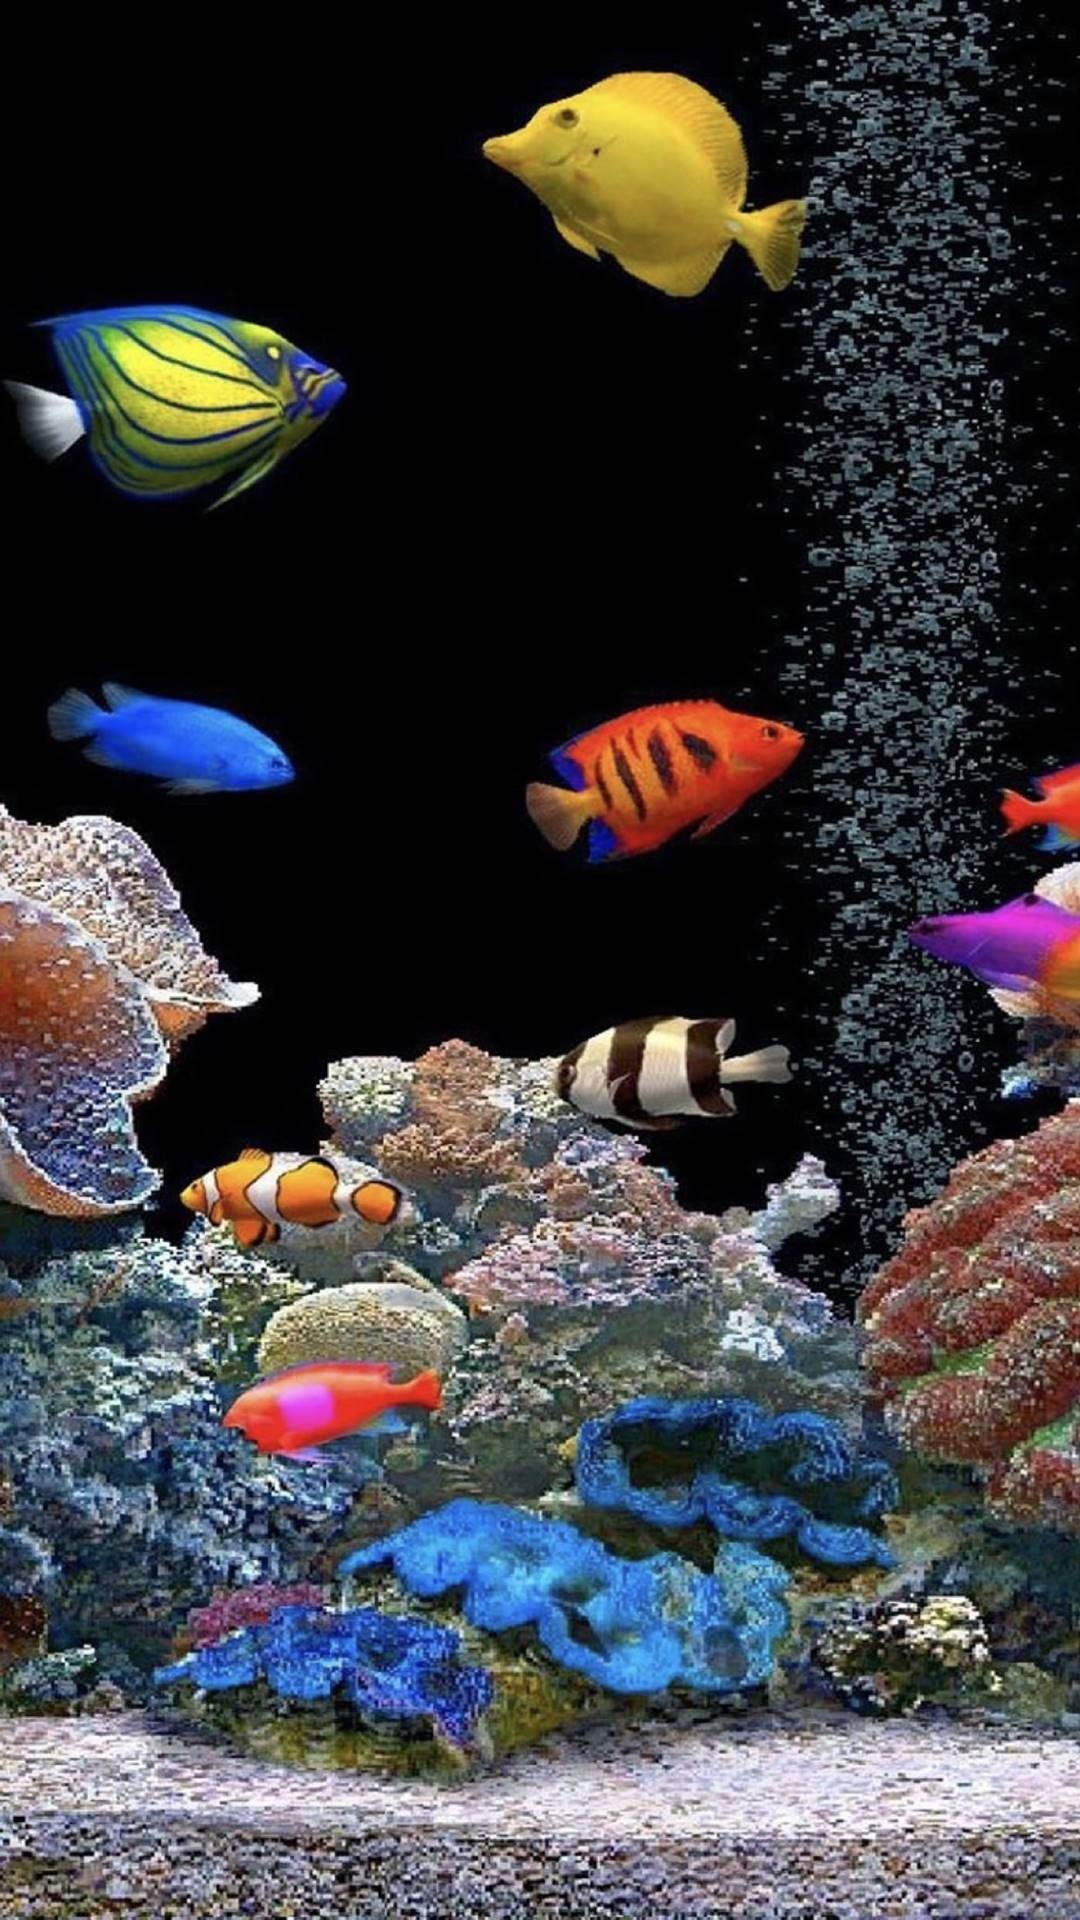 Aquarium screensaver, Relaxing underwater visuals, Serene atmosphere, Tranquil aquatic experience, Nature's calm, 1080x1920 Full HD Phone